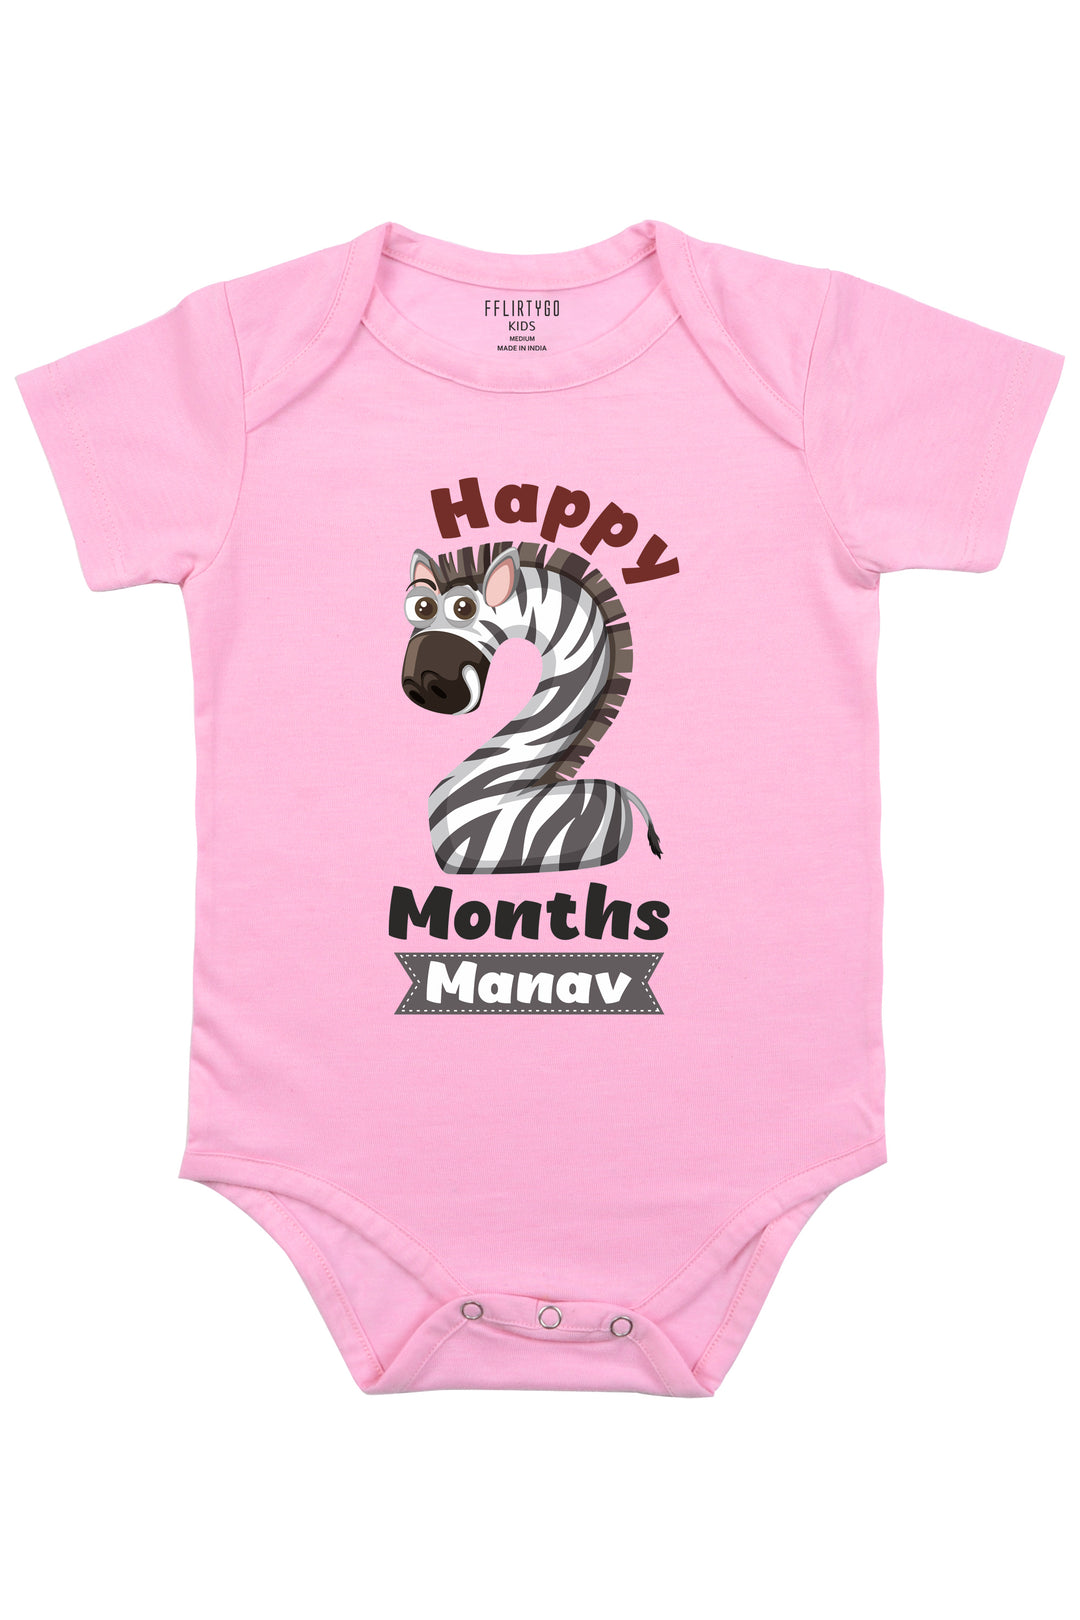 Two Month Milestone Baby Romper | Onesies w/ Custom Name